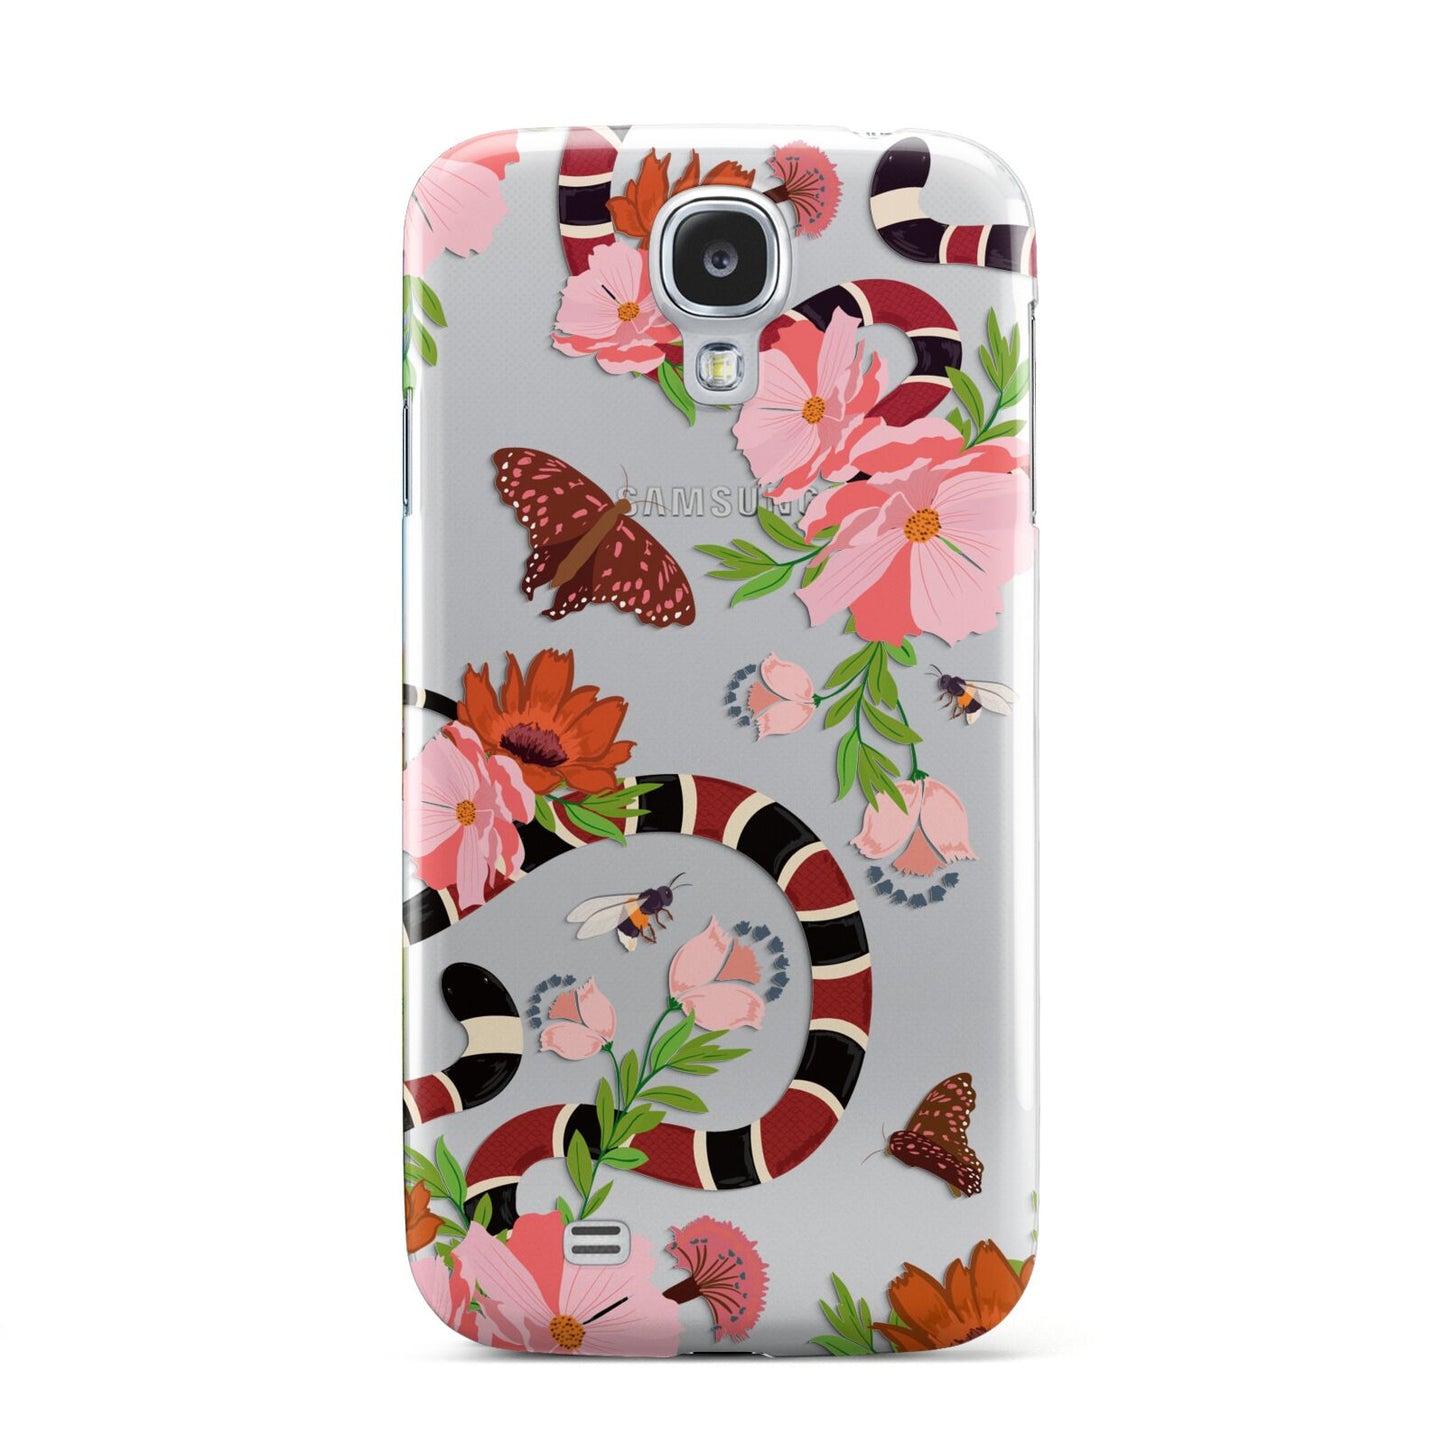 Floral Snake Samsung Galaxy S4 Case